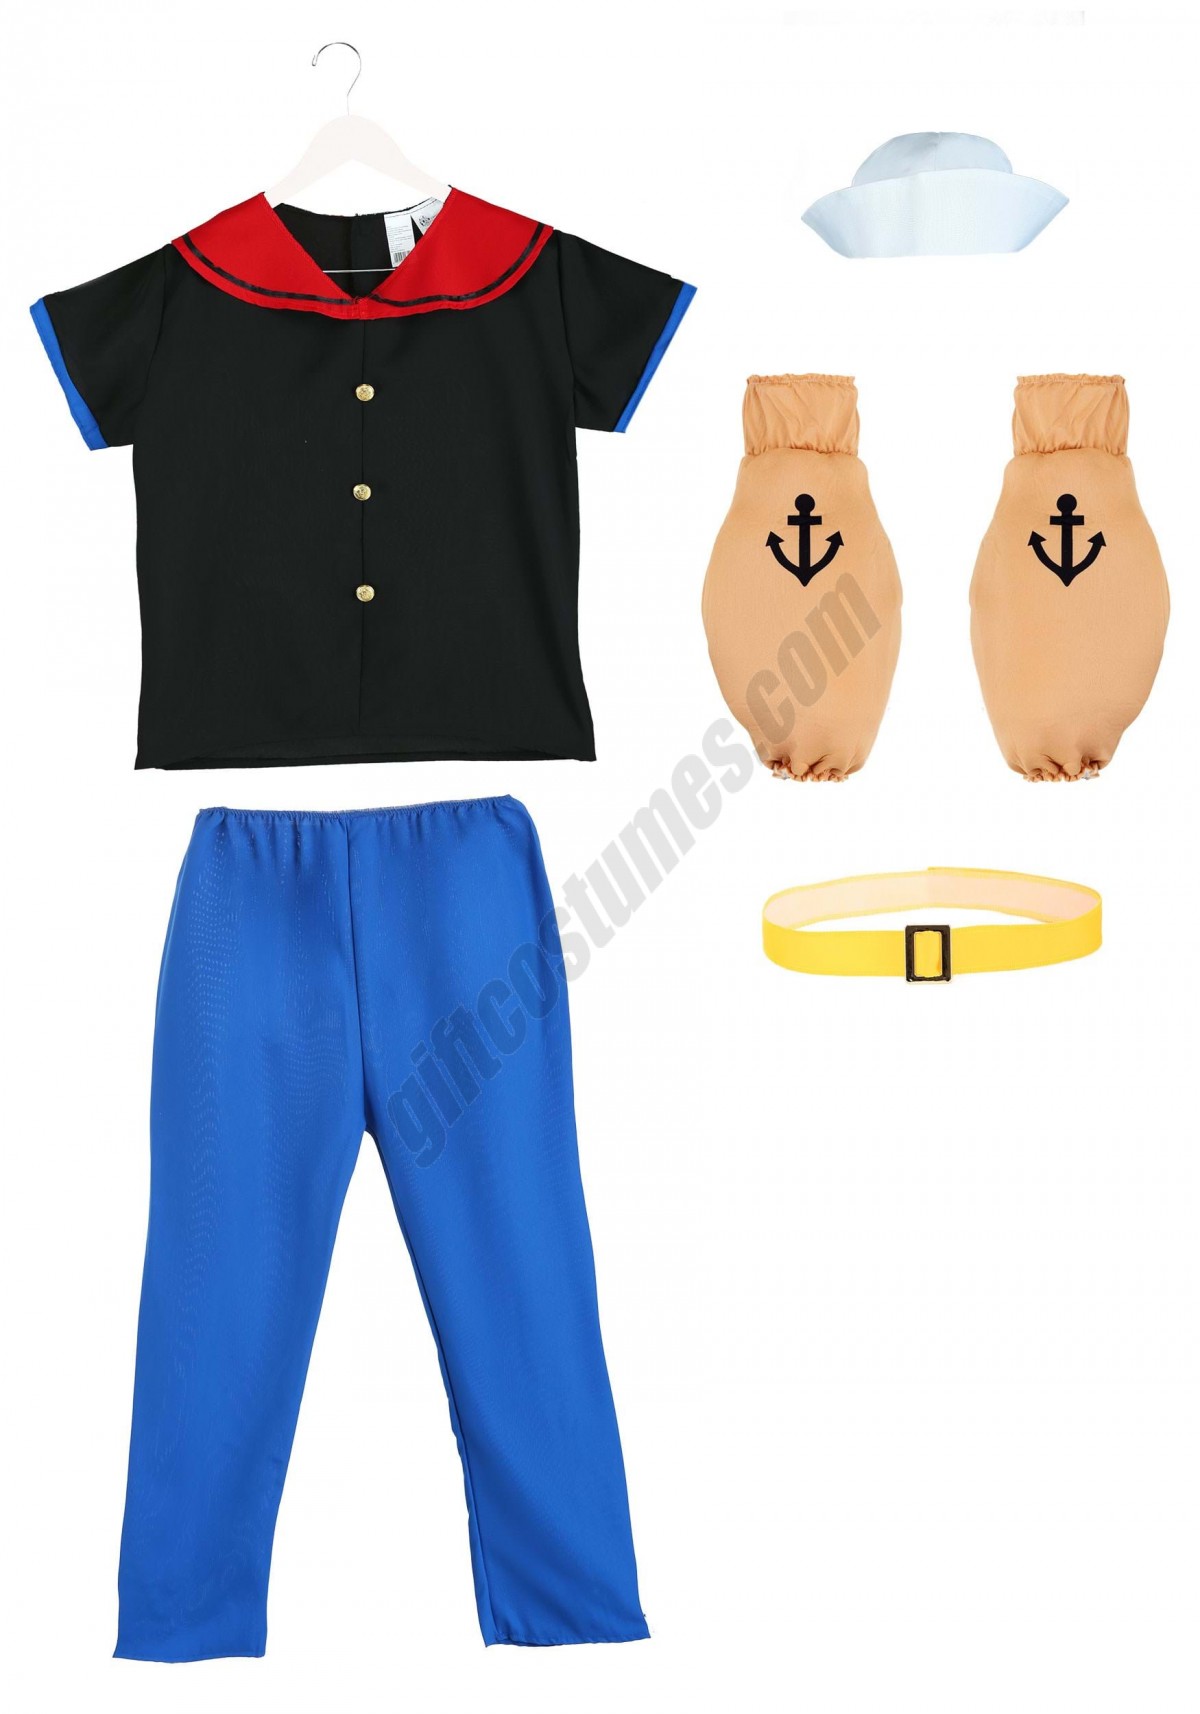 Adult Popeye Costume - Men's - -5